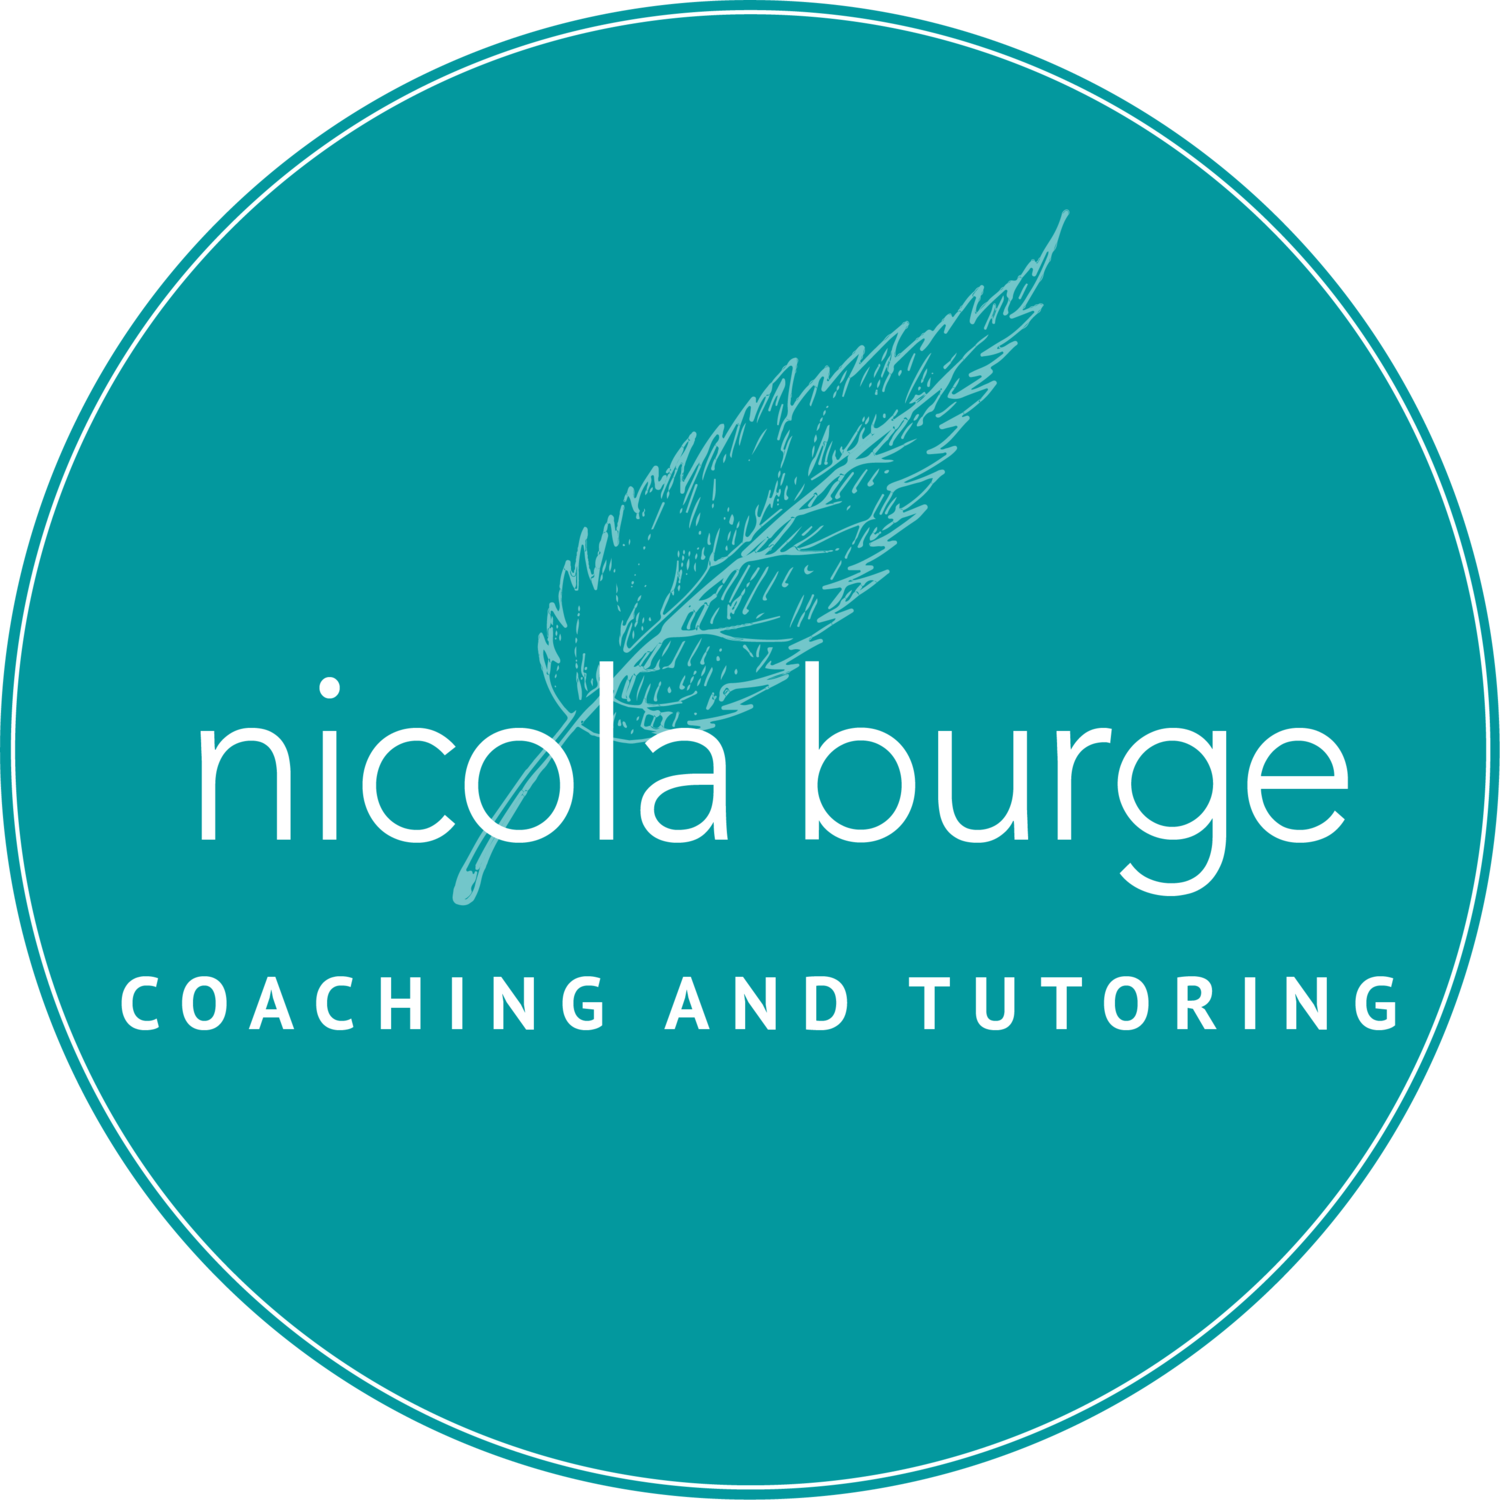 Nicola Burge Tutoring and Coaching